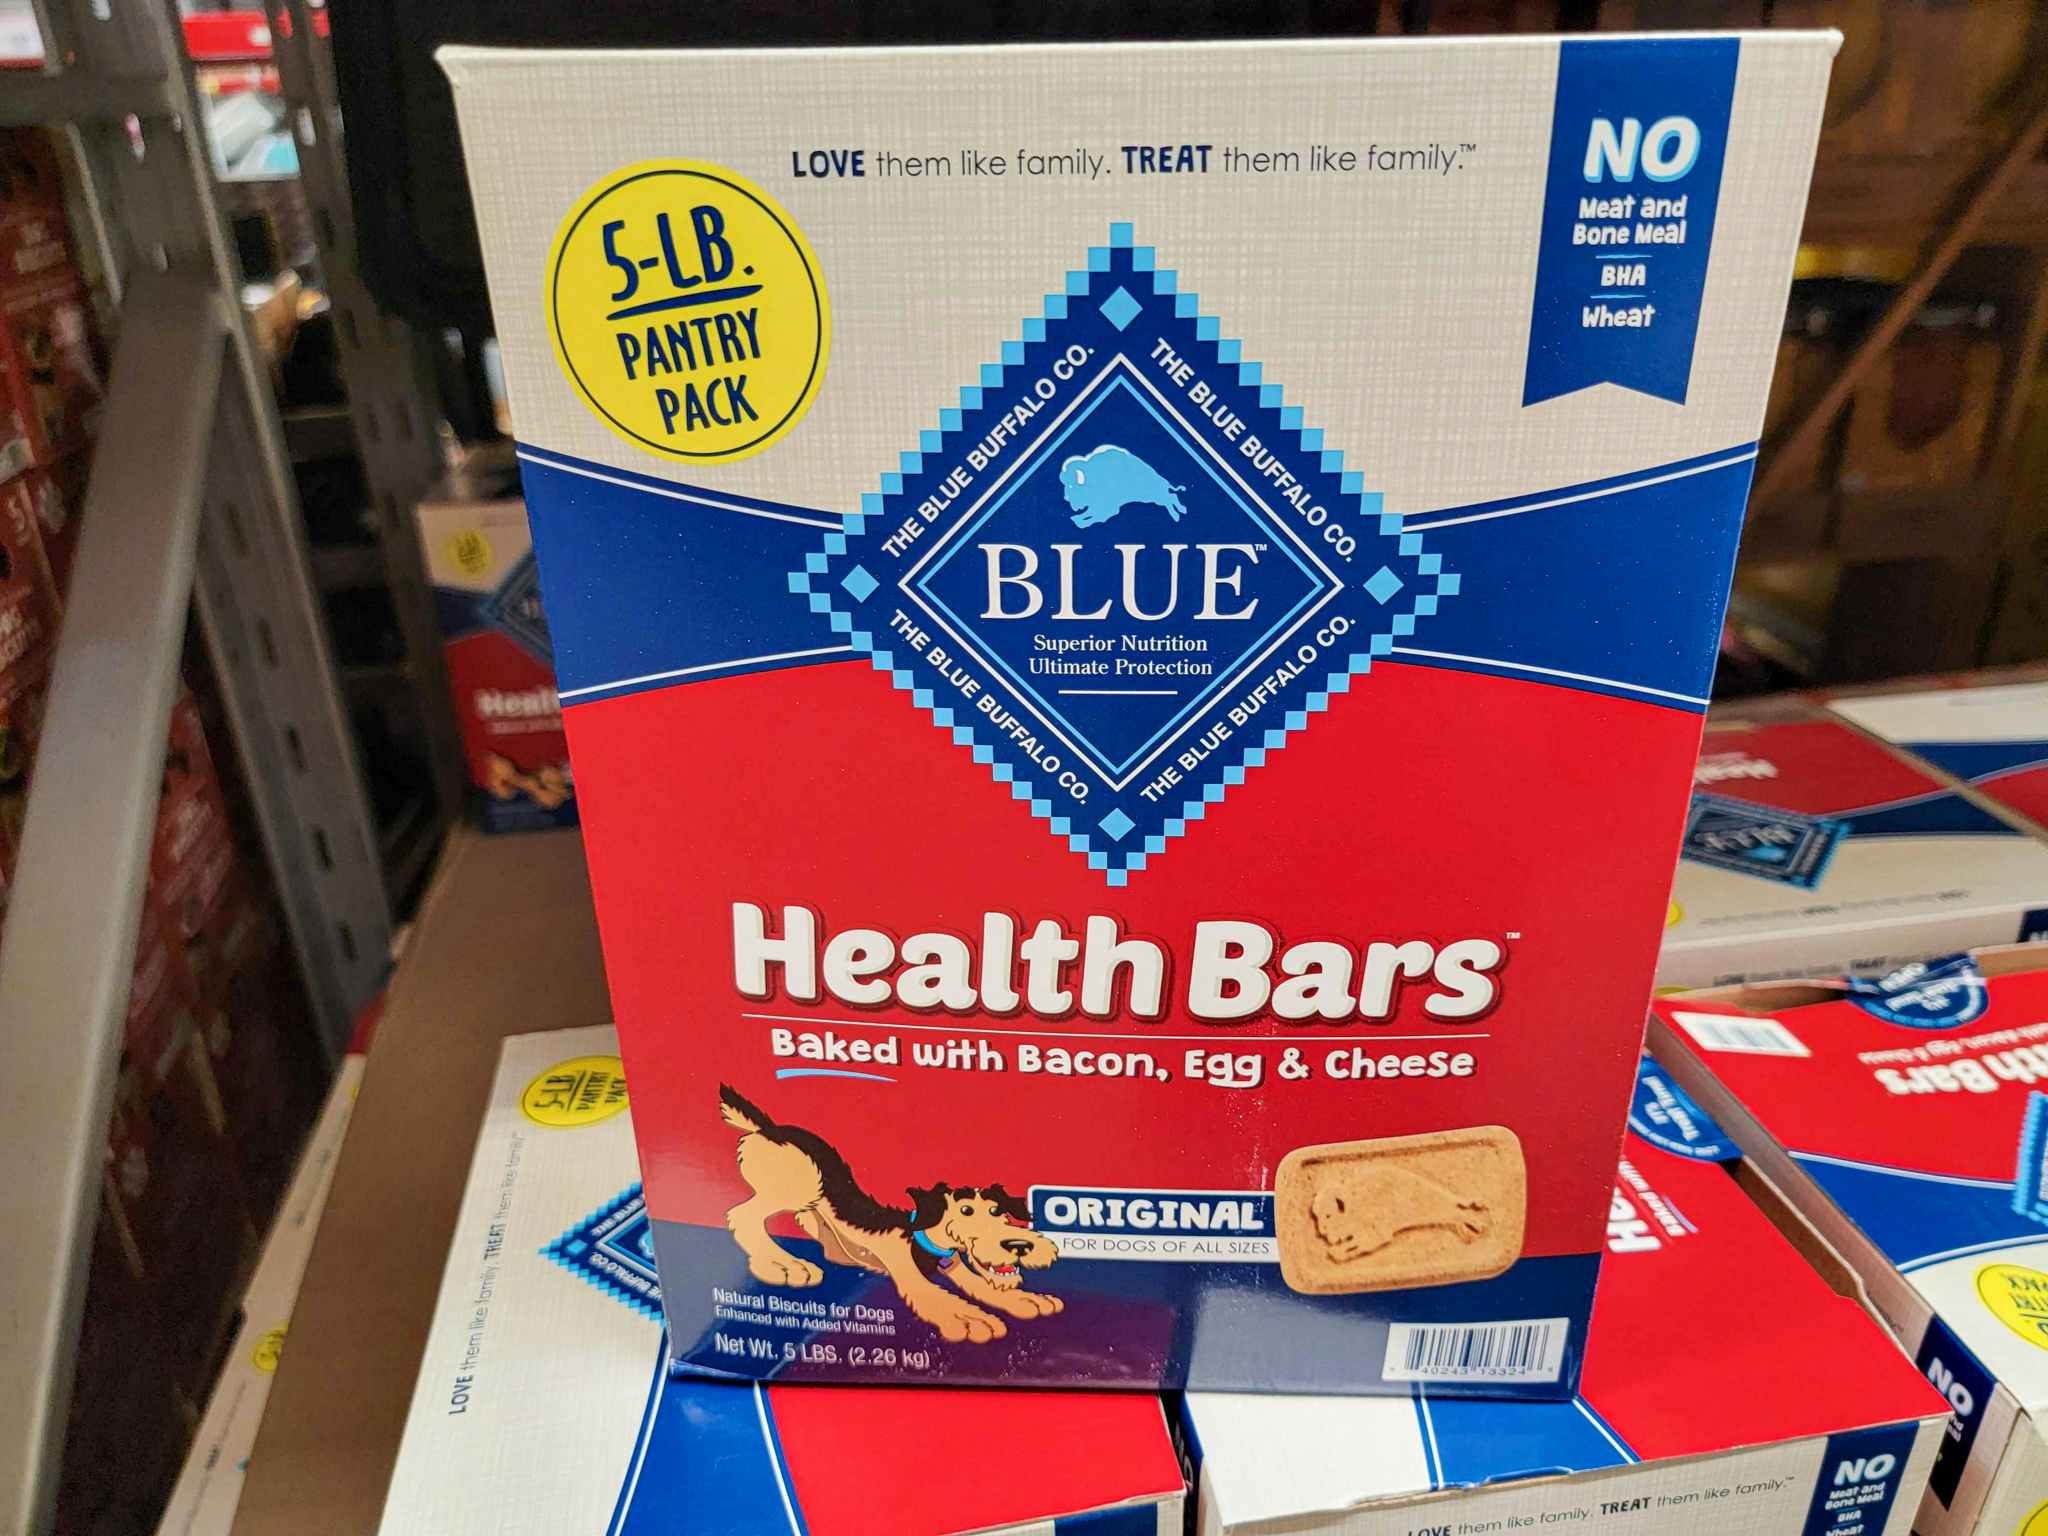 a 5 pound box of blue buffalo health bar dog treats